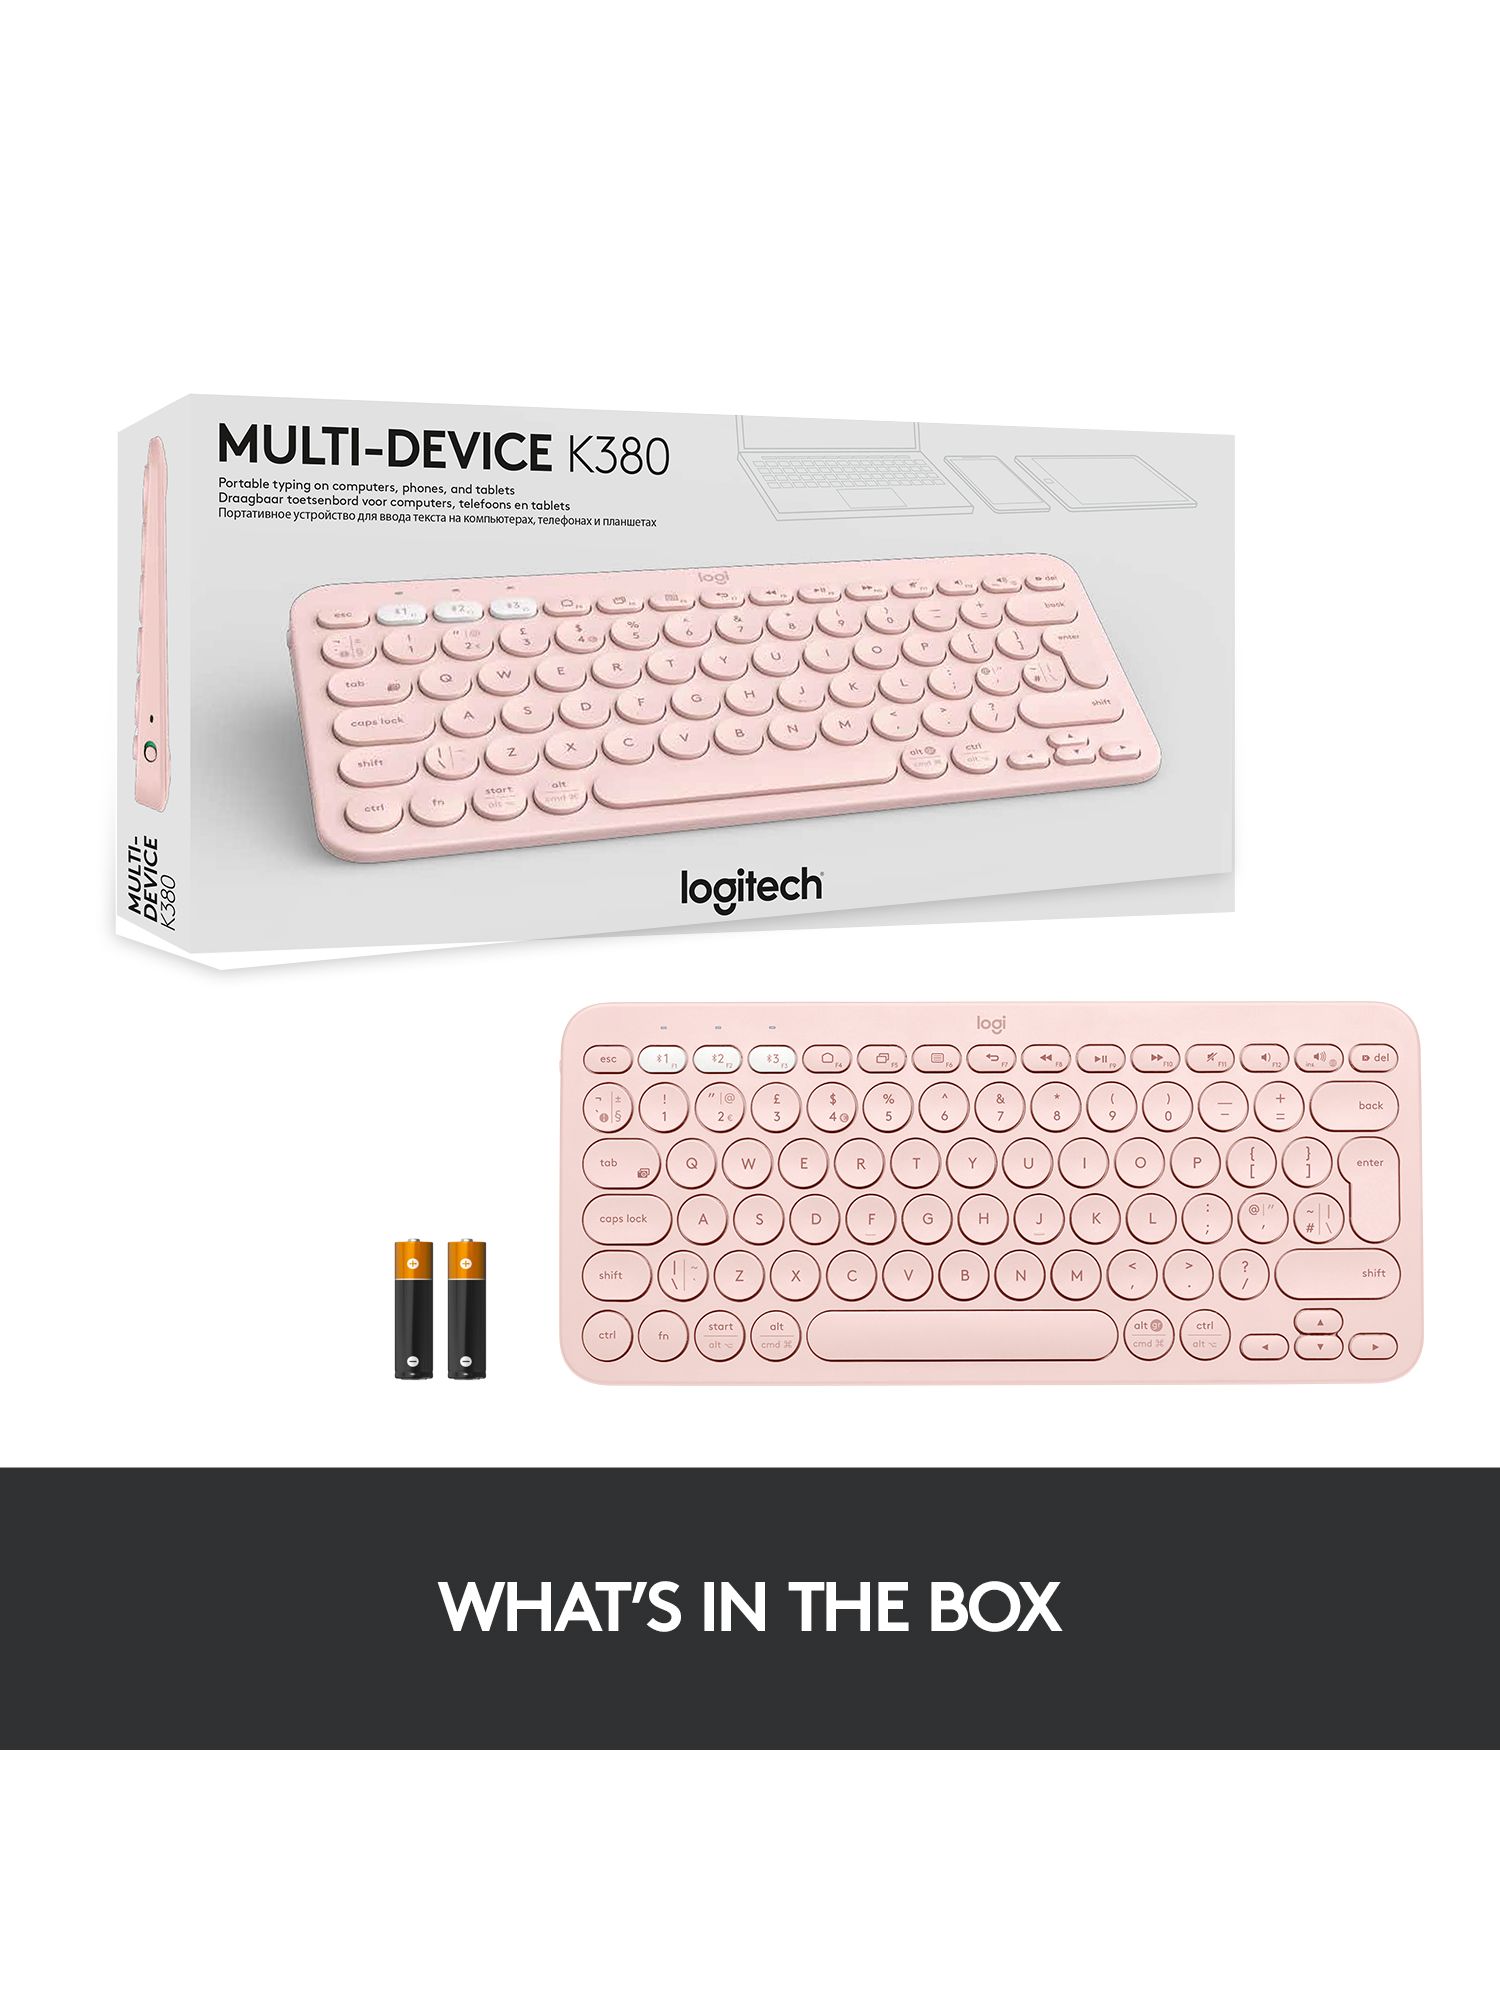 Logitech K380 Multi-Device Keyboard, Rose Pink